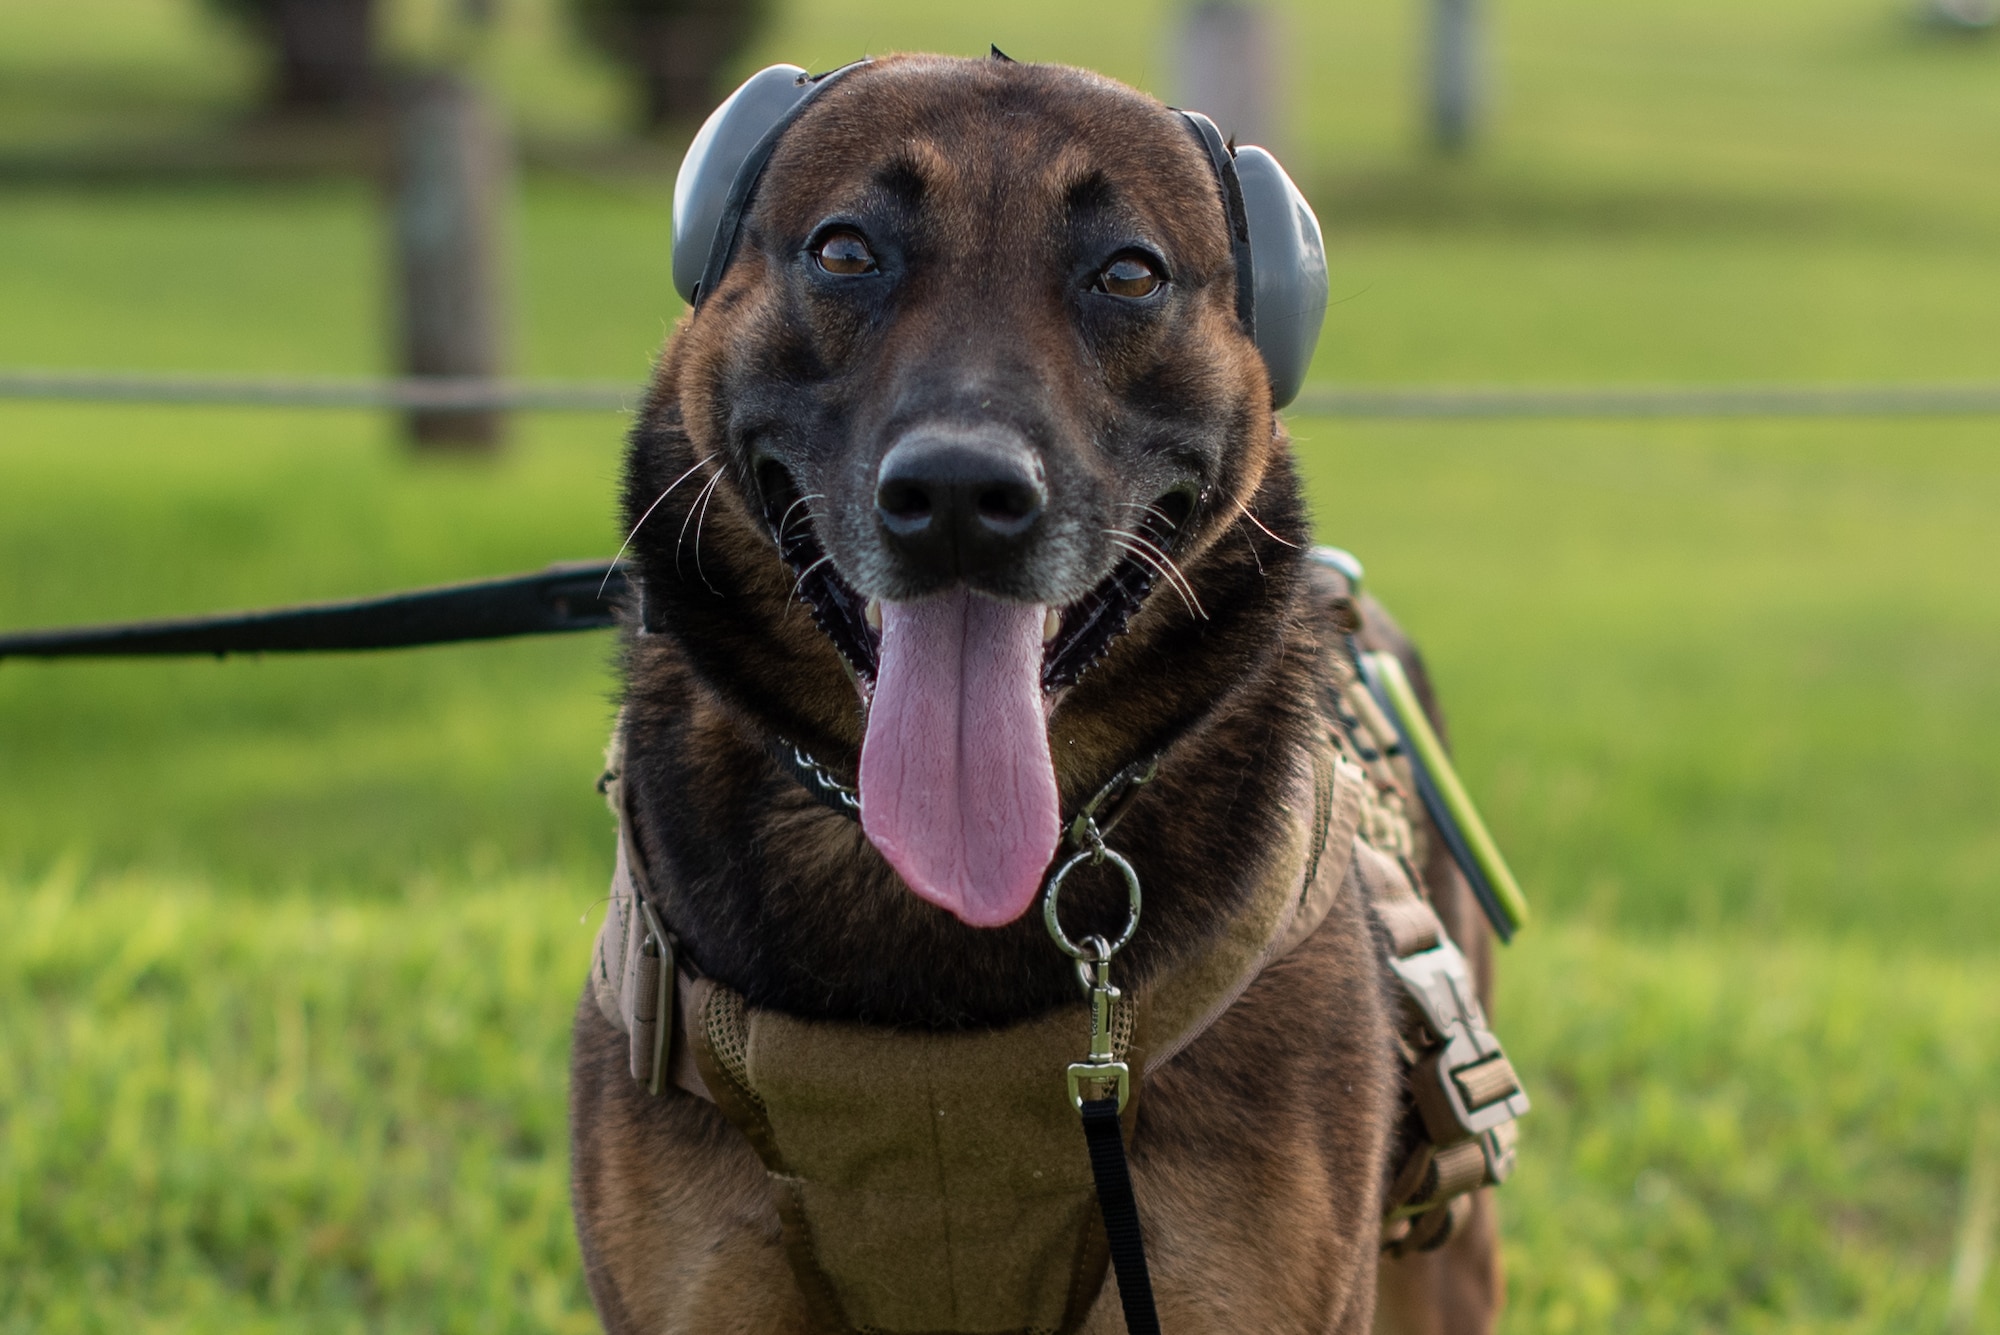 Dog wears ear protection.